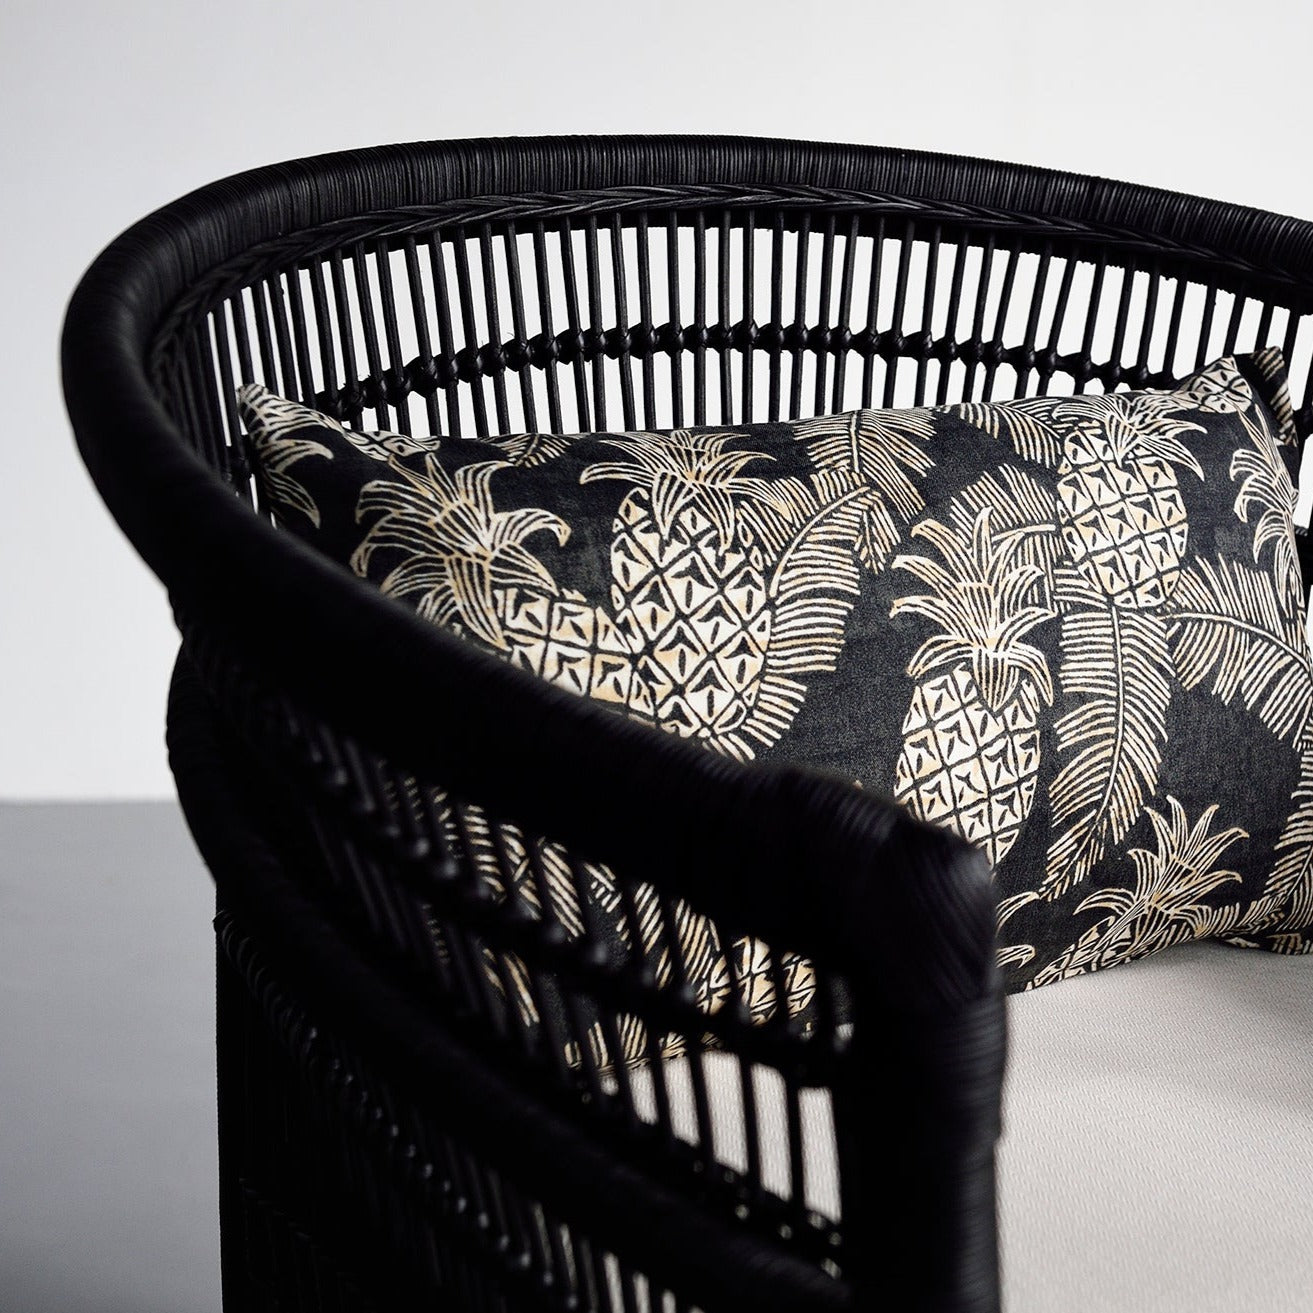 Malawi Arm Chair - Black - Furniture